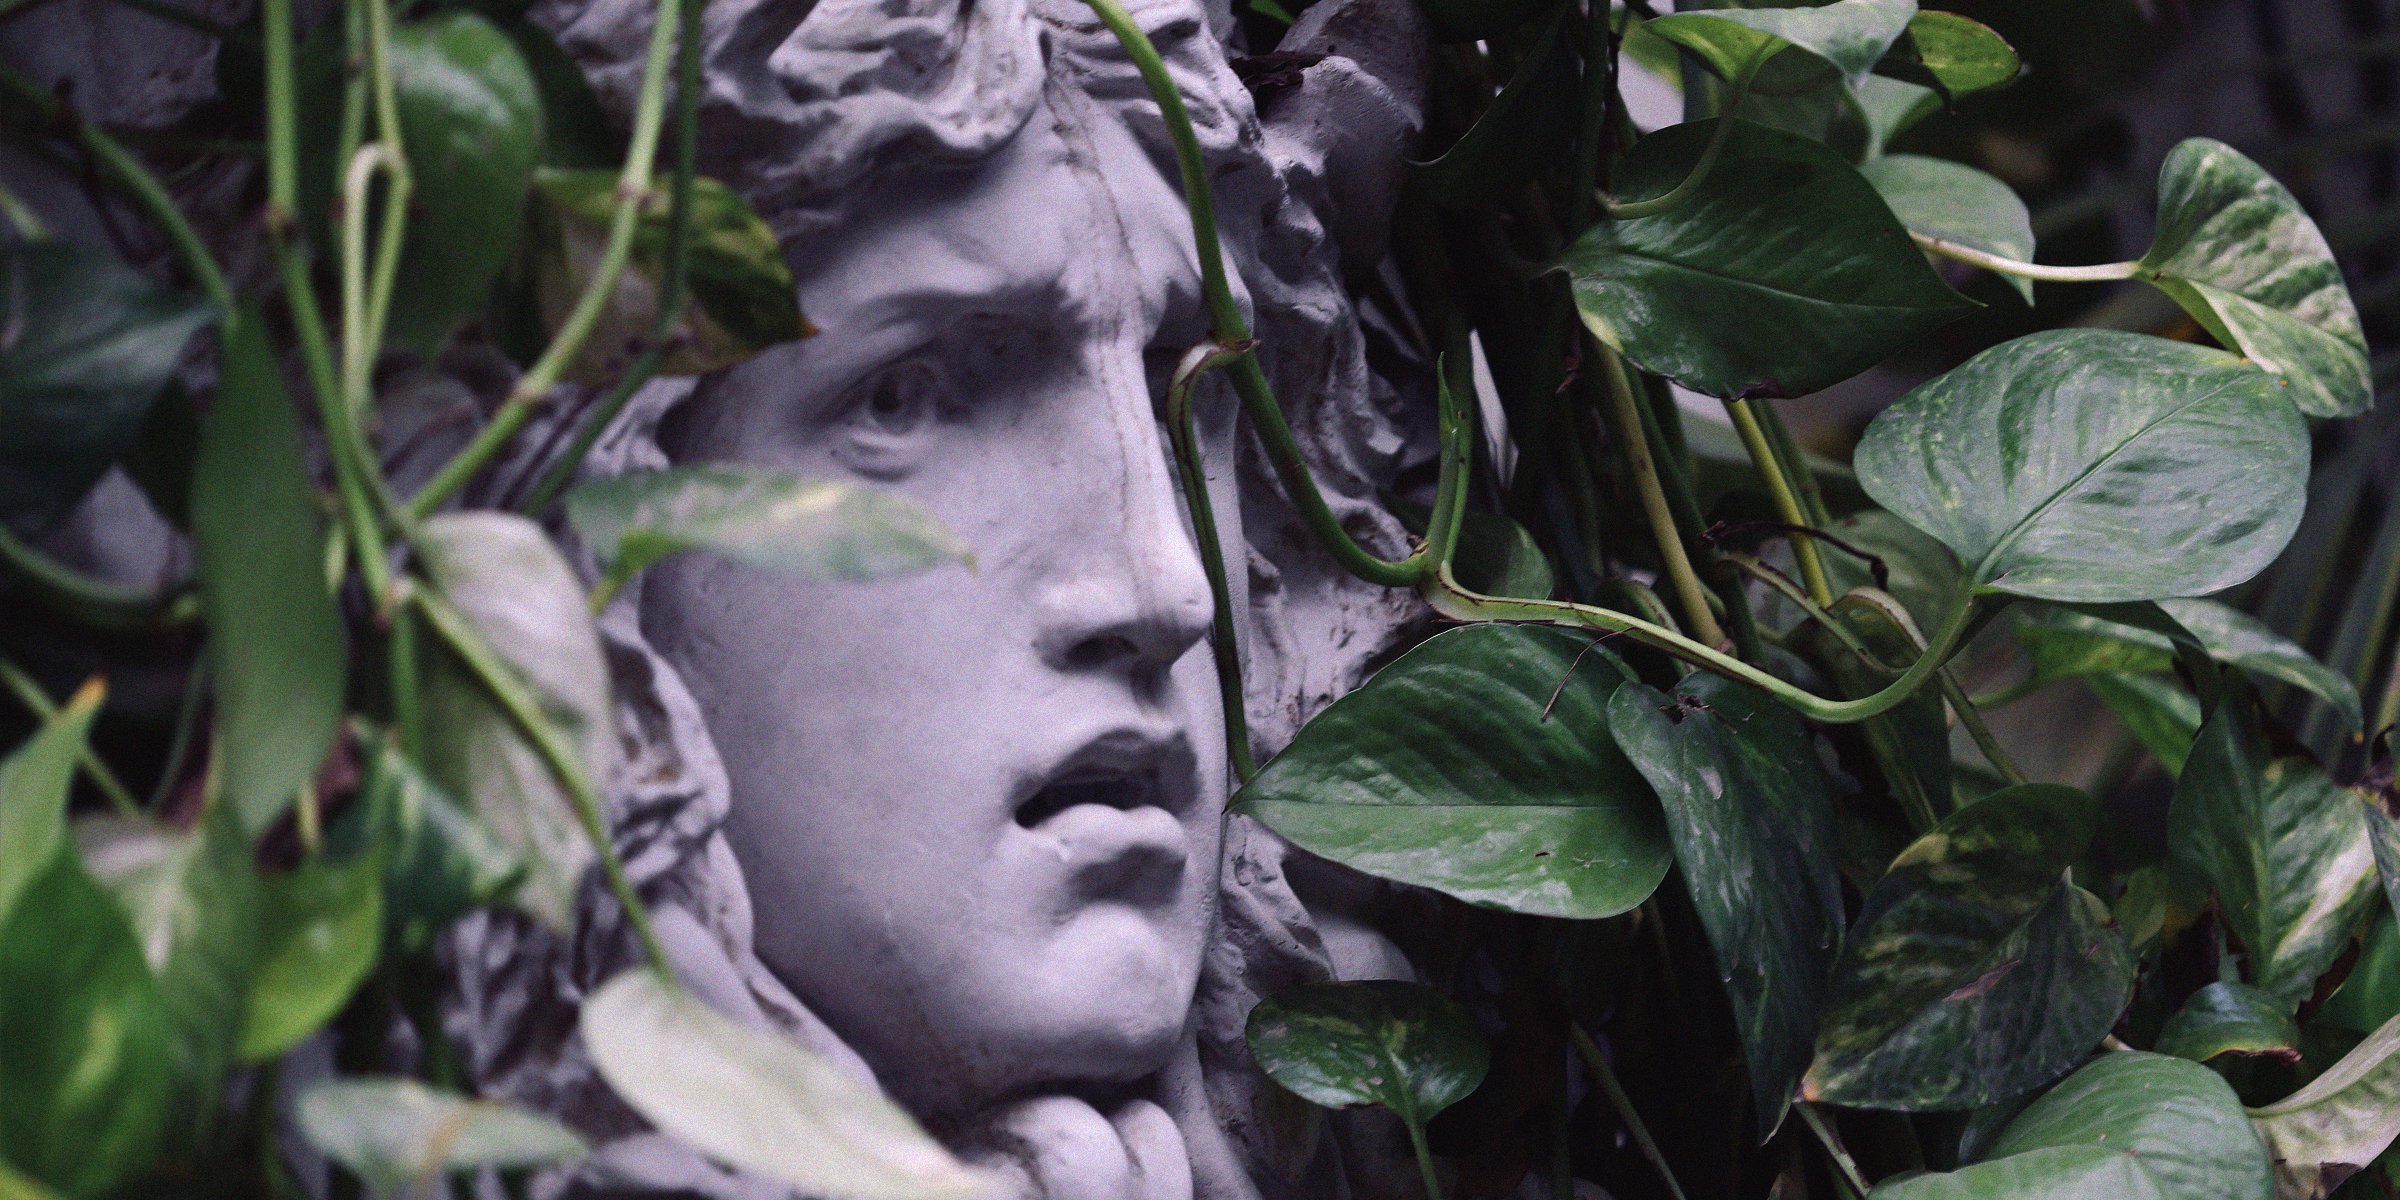  Unsplash | A statue of mythological figure Medusa among leaves 